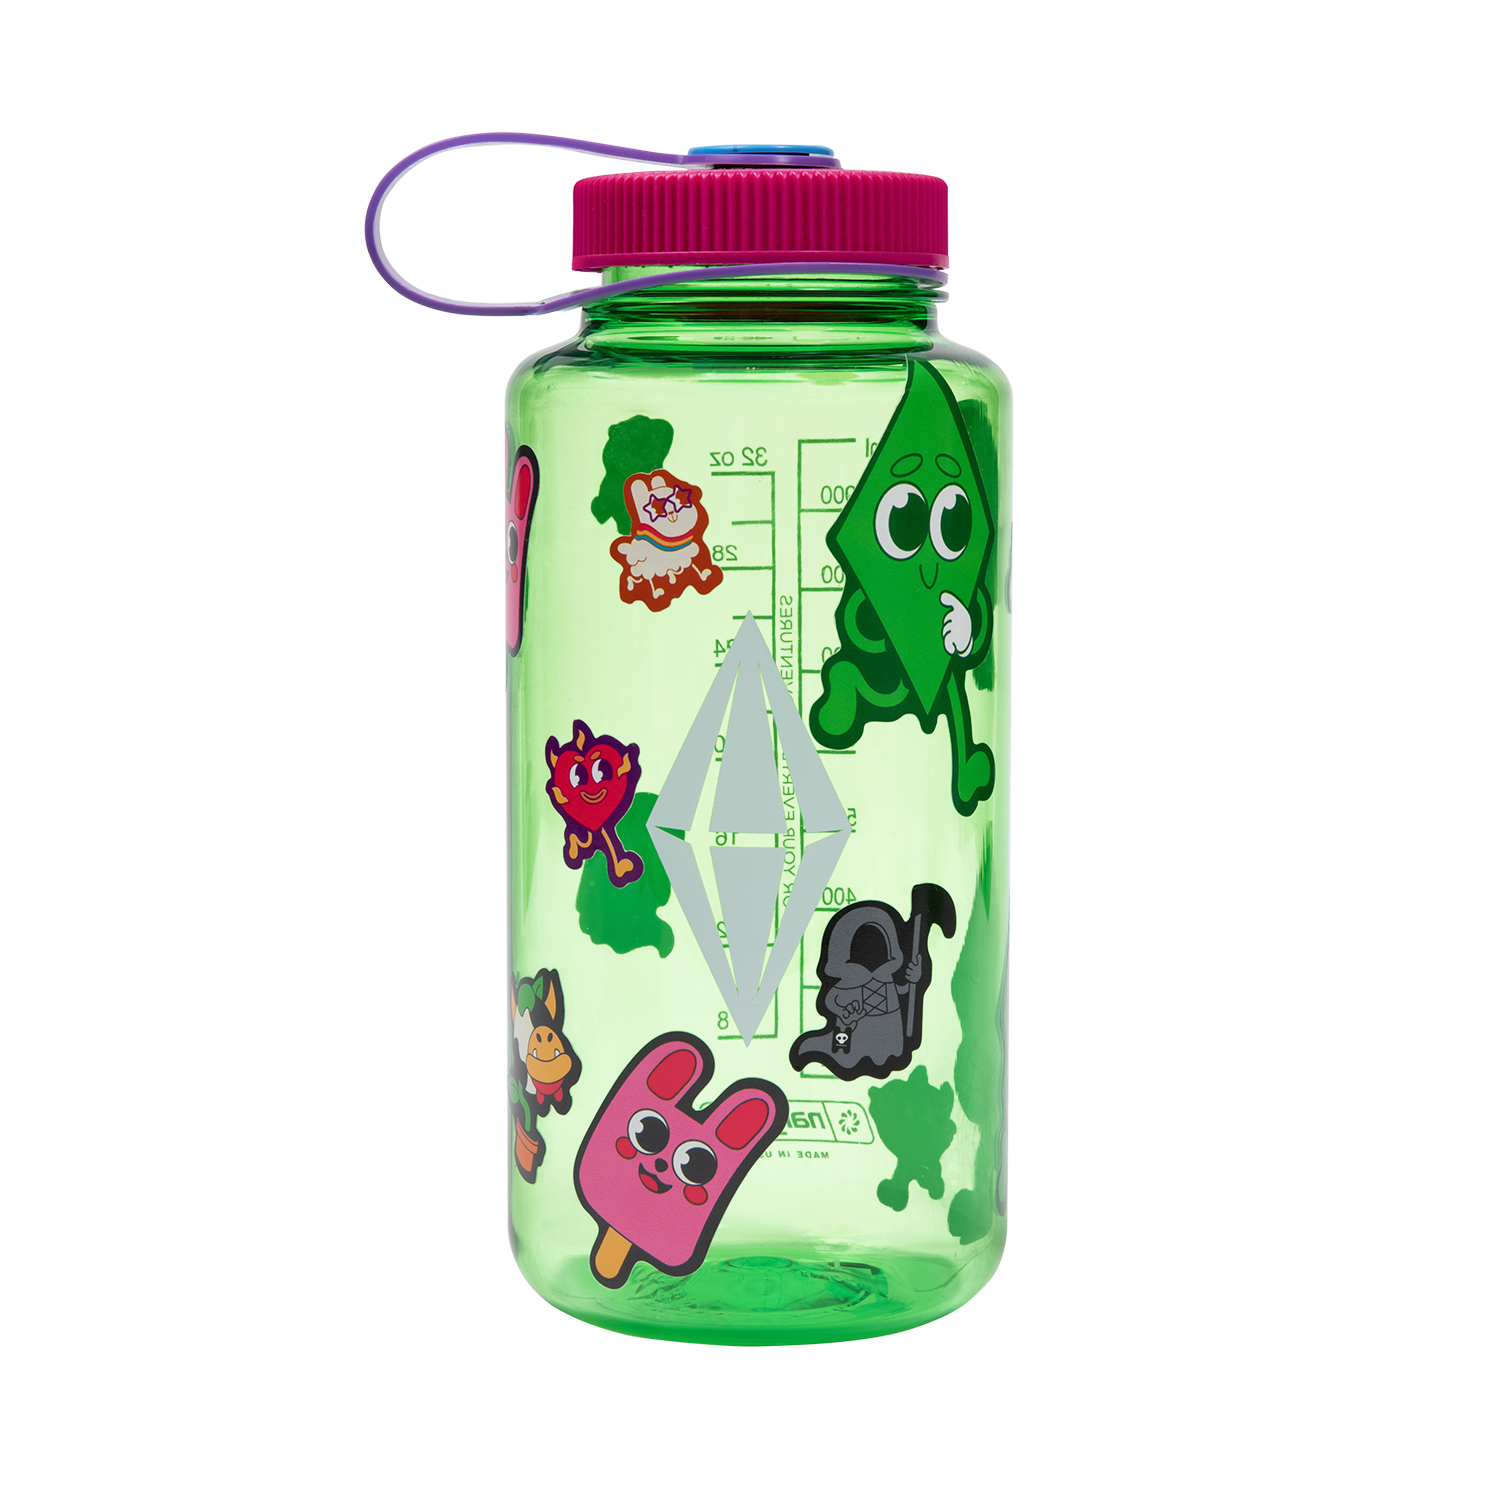 Plumbob 32 oz. Nalgene Bottle + Sticker Pack Bundle – The Sims Shop